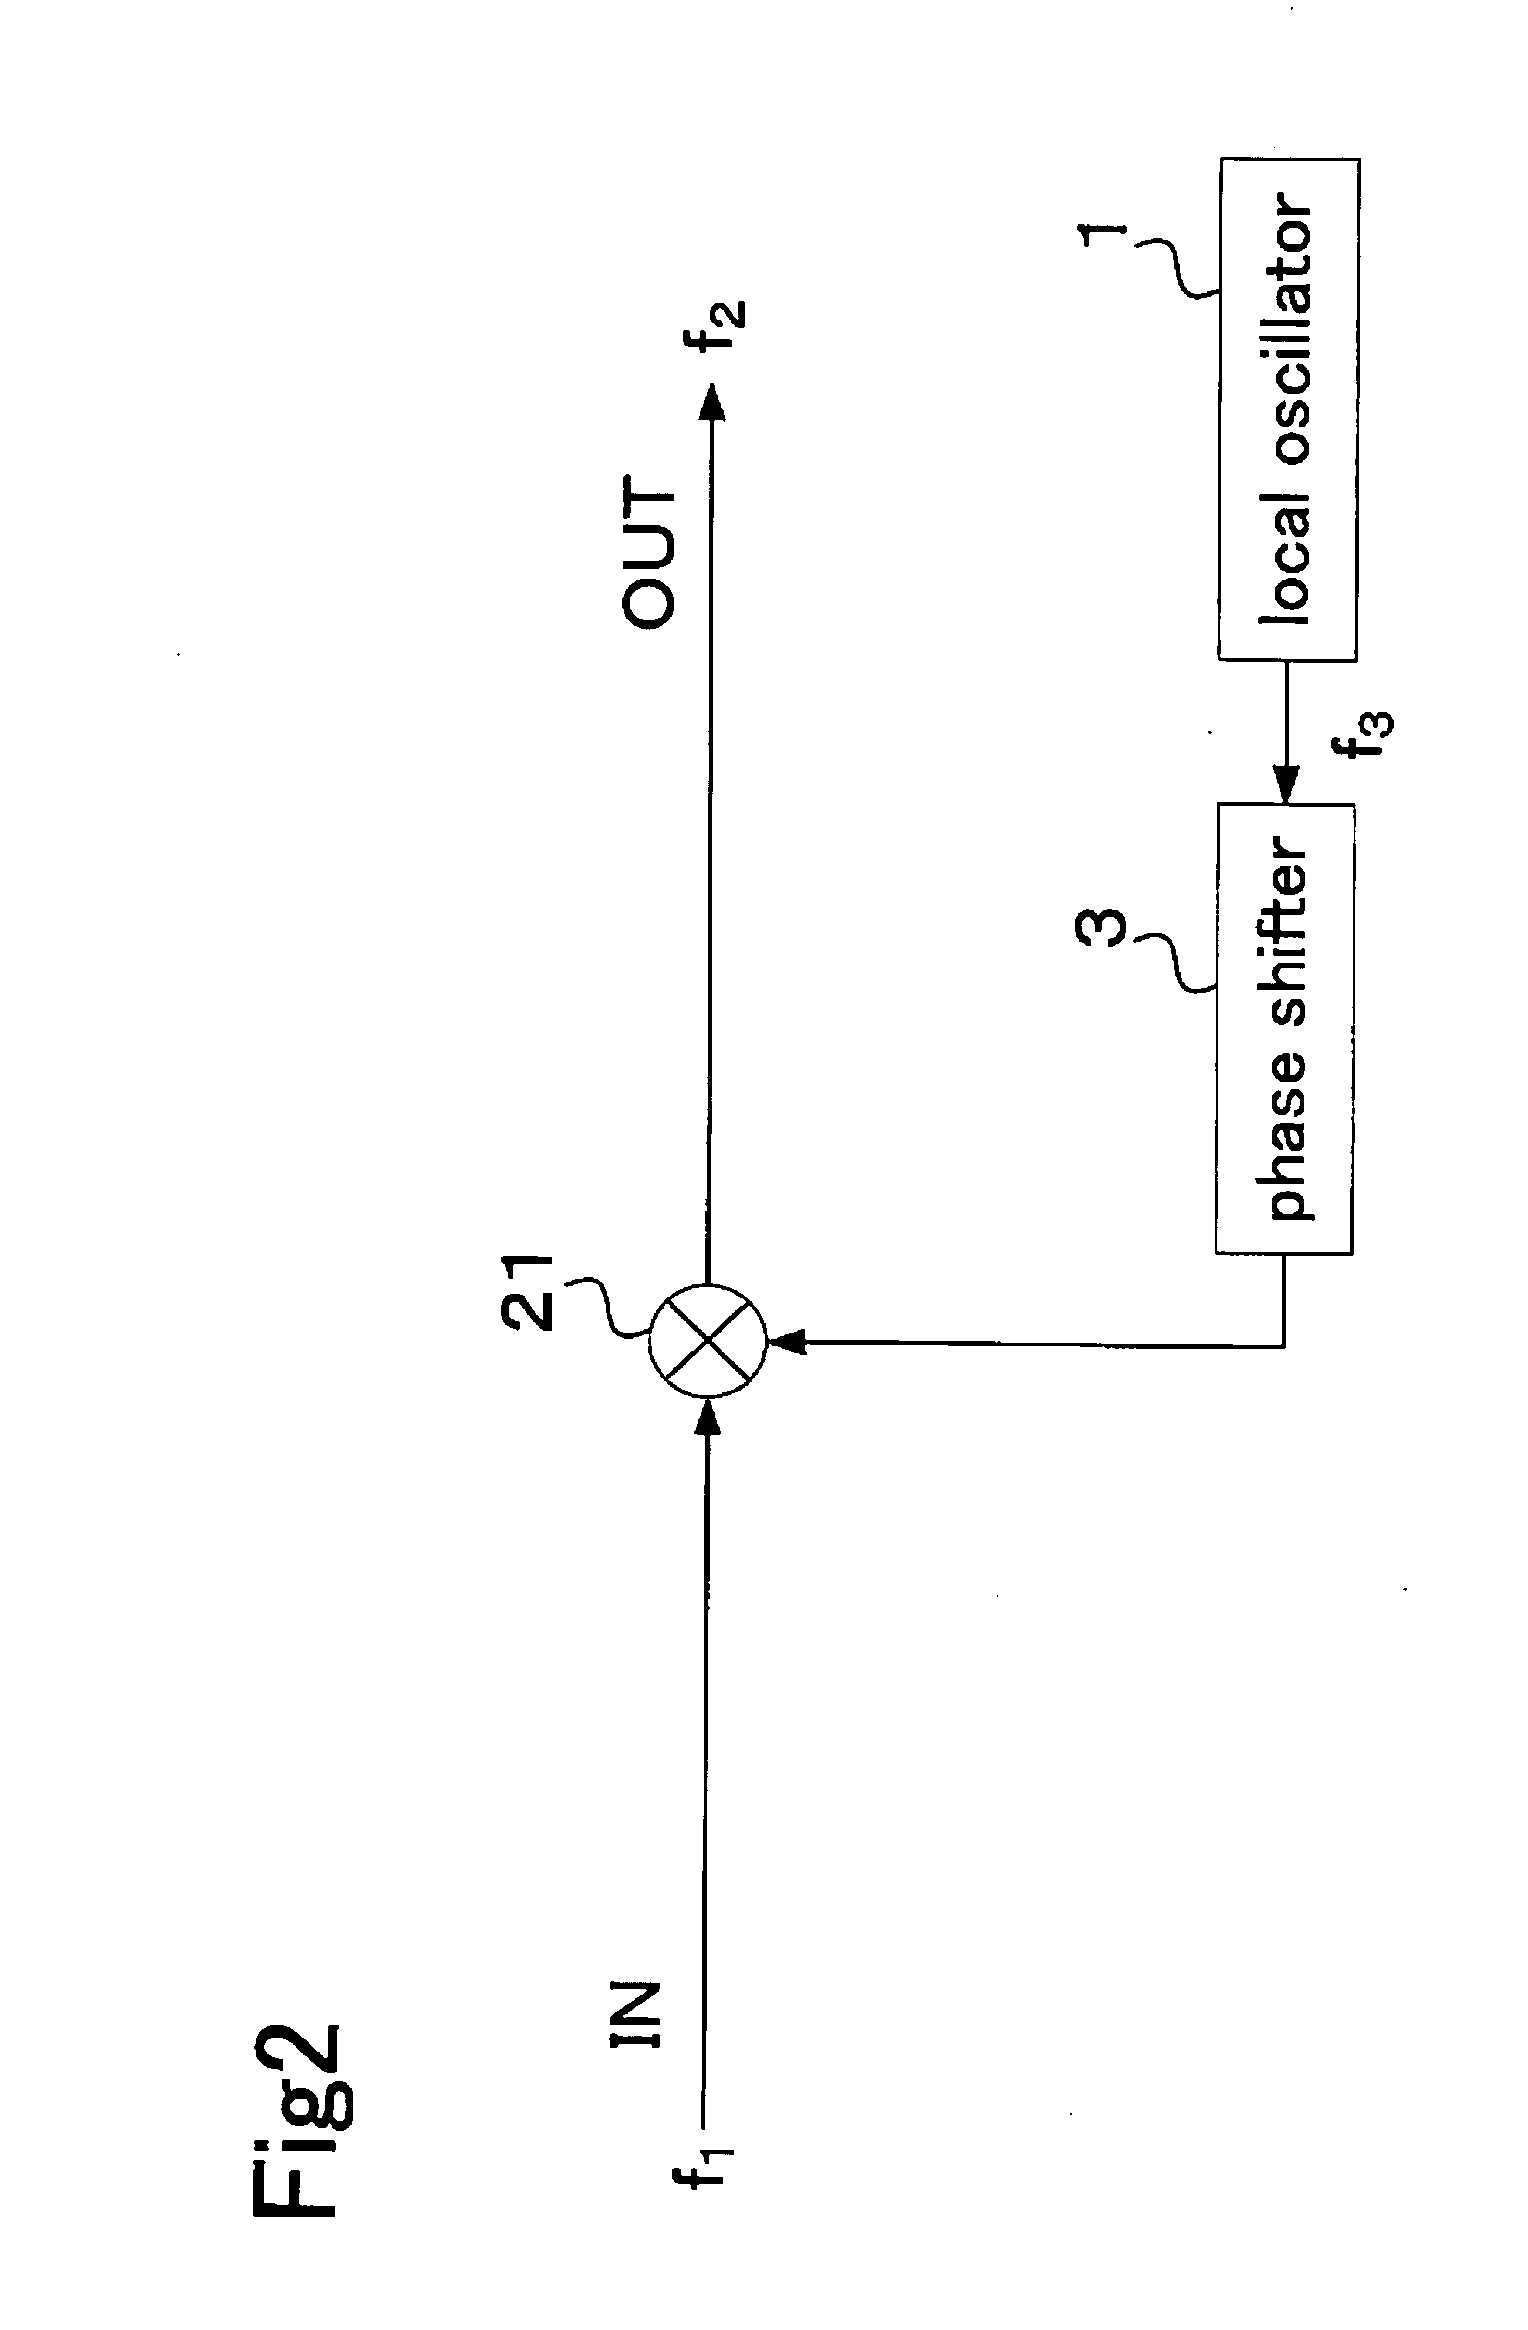 Signal conversion apparatus and signal conversion method